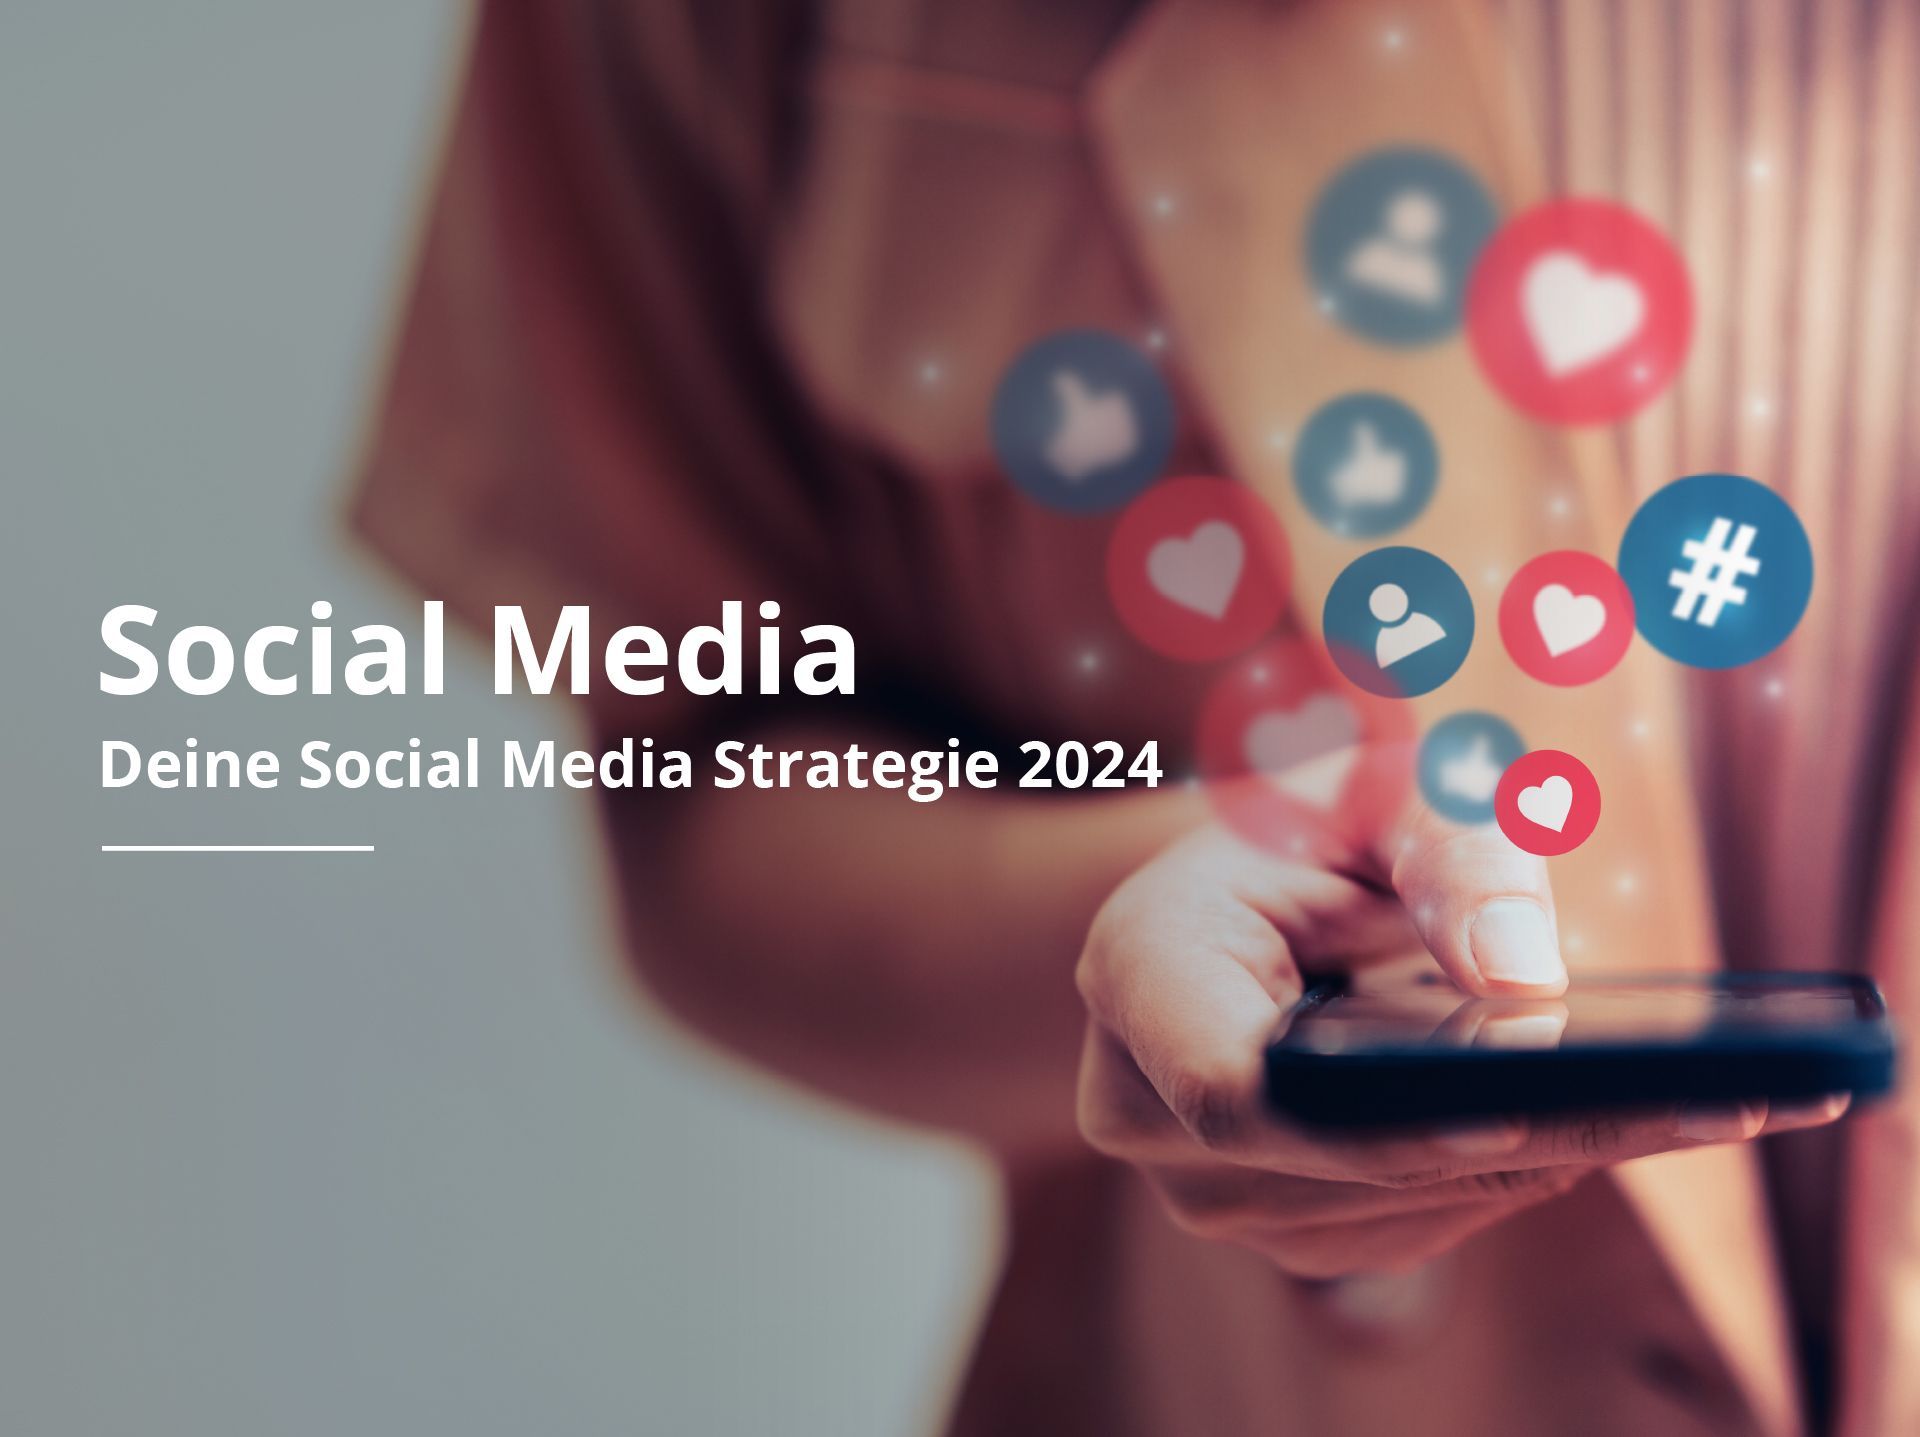 Deine Social Media Strategie 2024